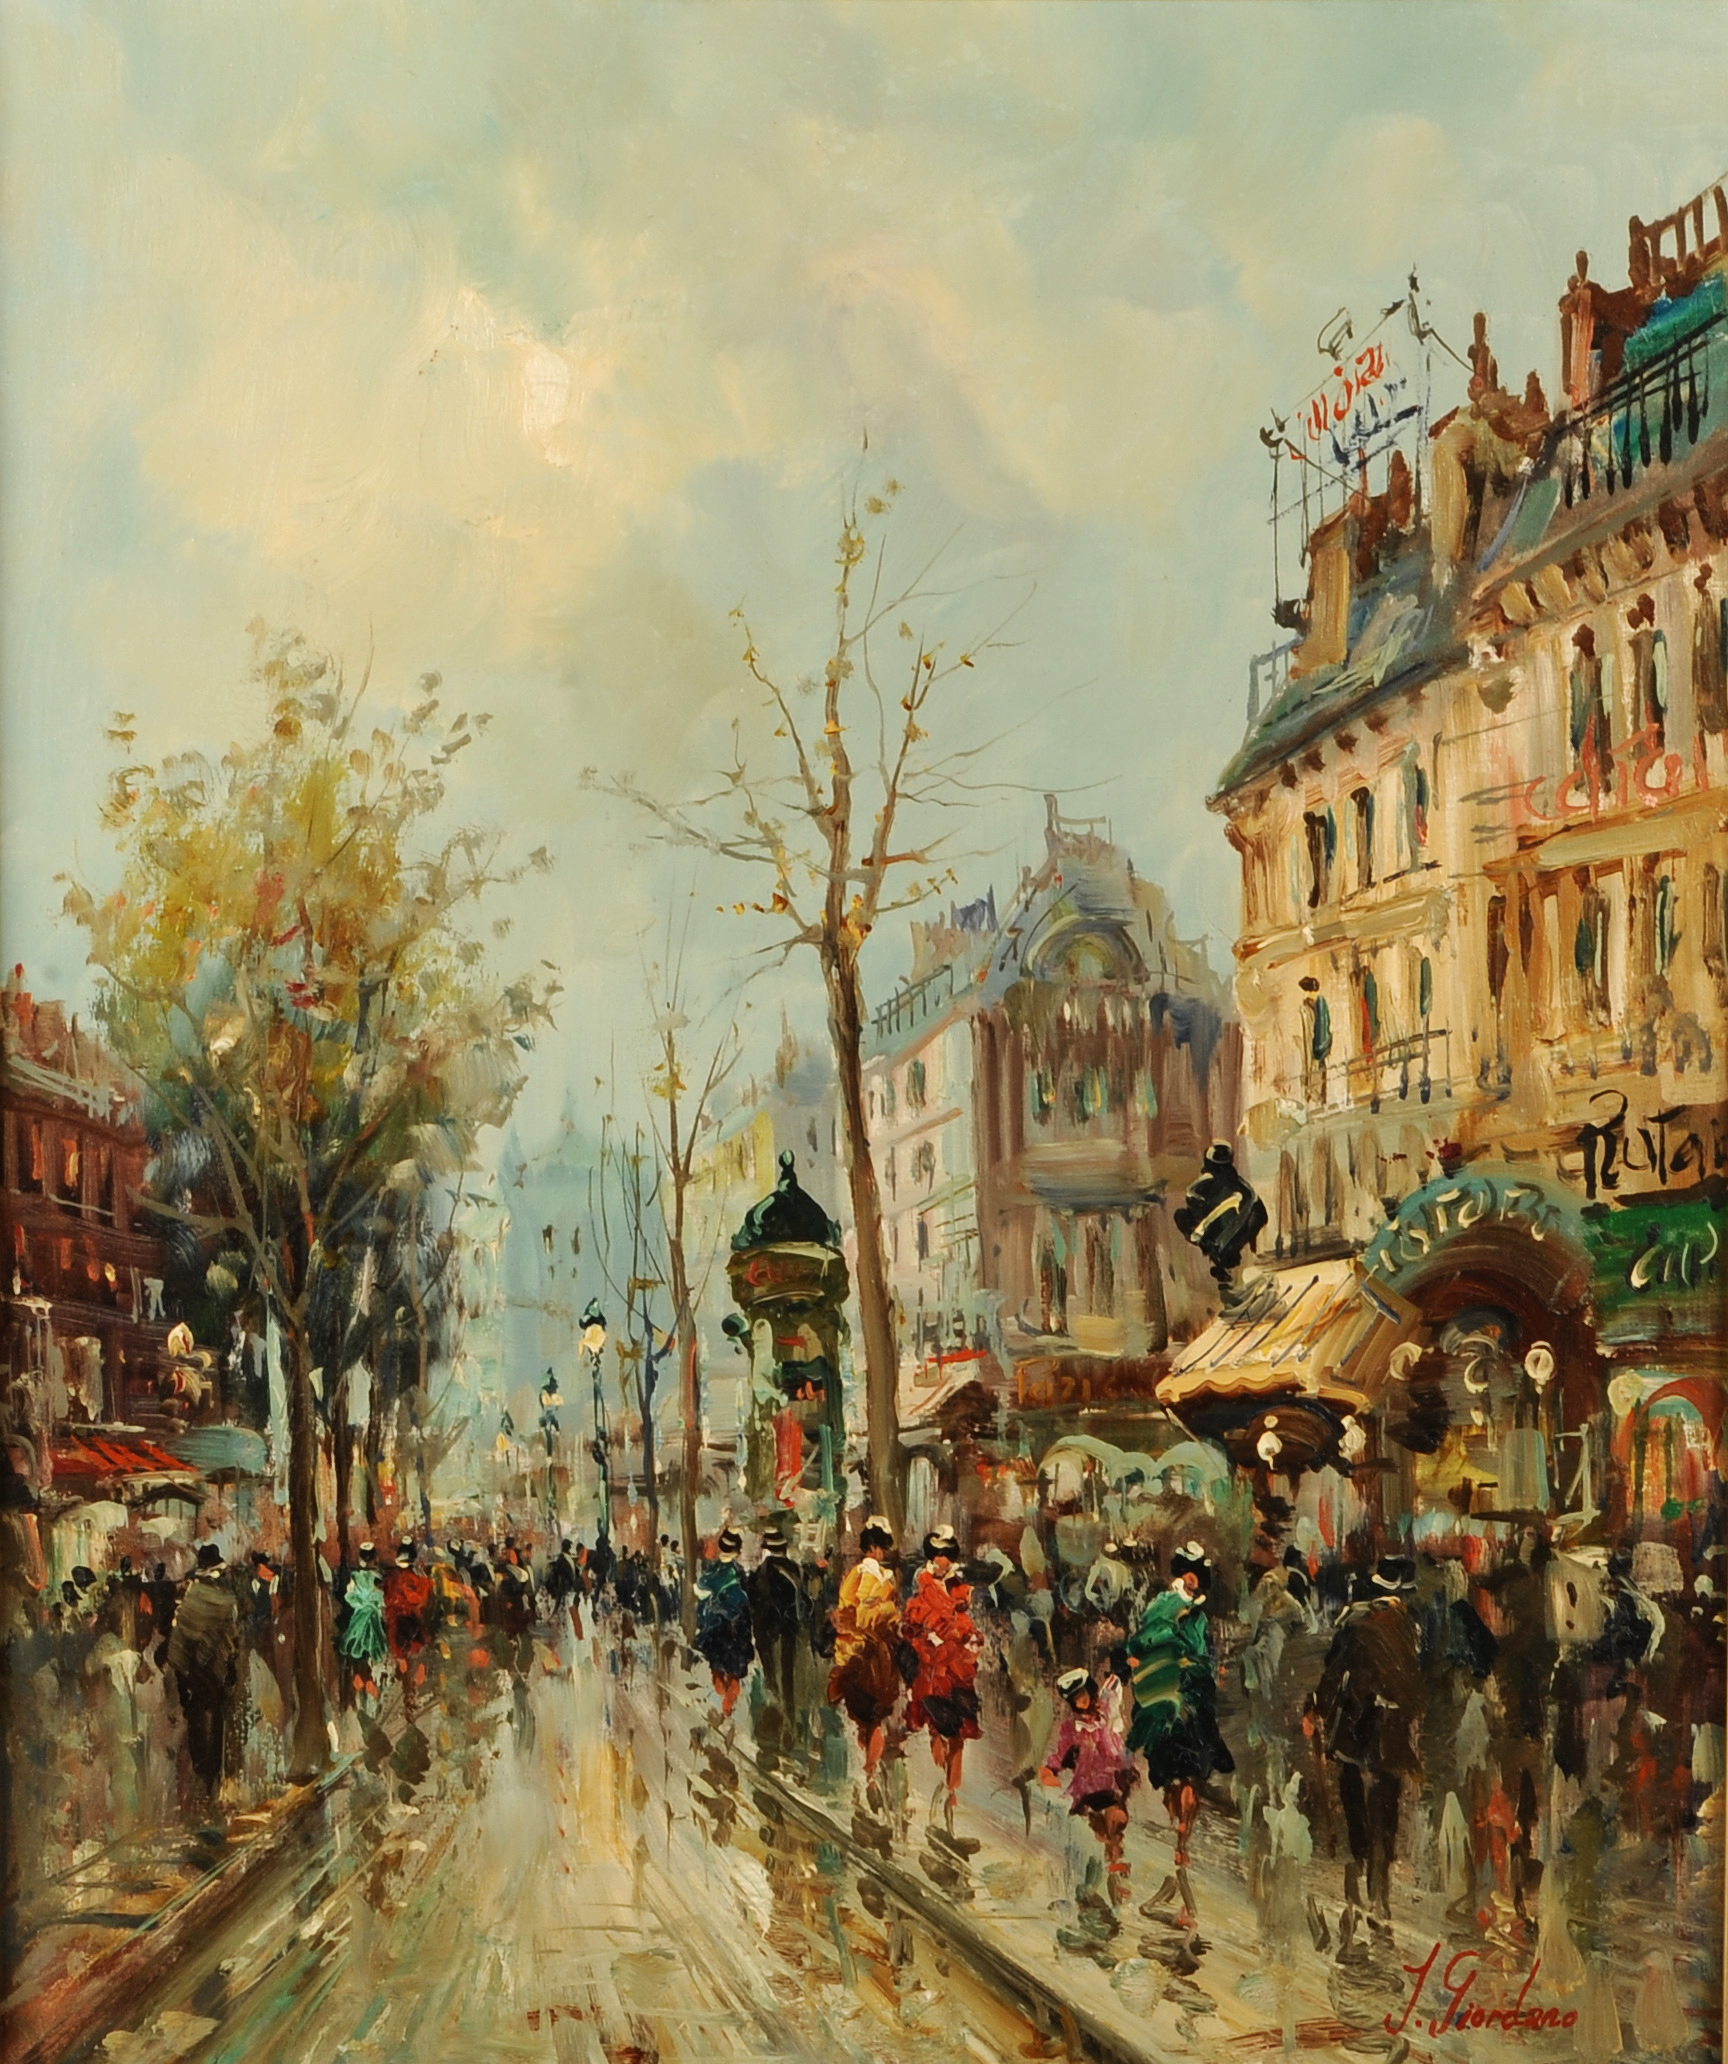 ARR FELICE GIORDANO (Italian 1880-1964), Paris street scene in Autumn, oil on canvas, signed lower